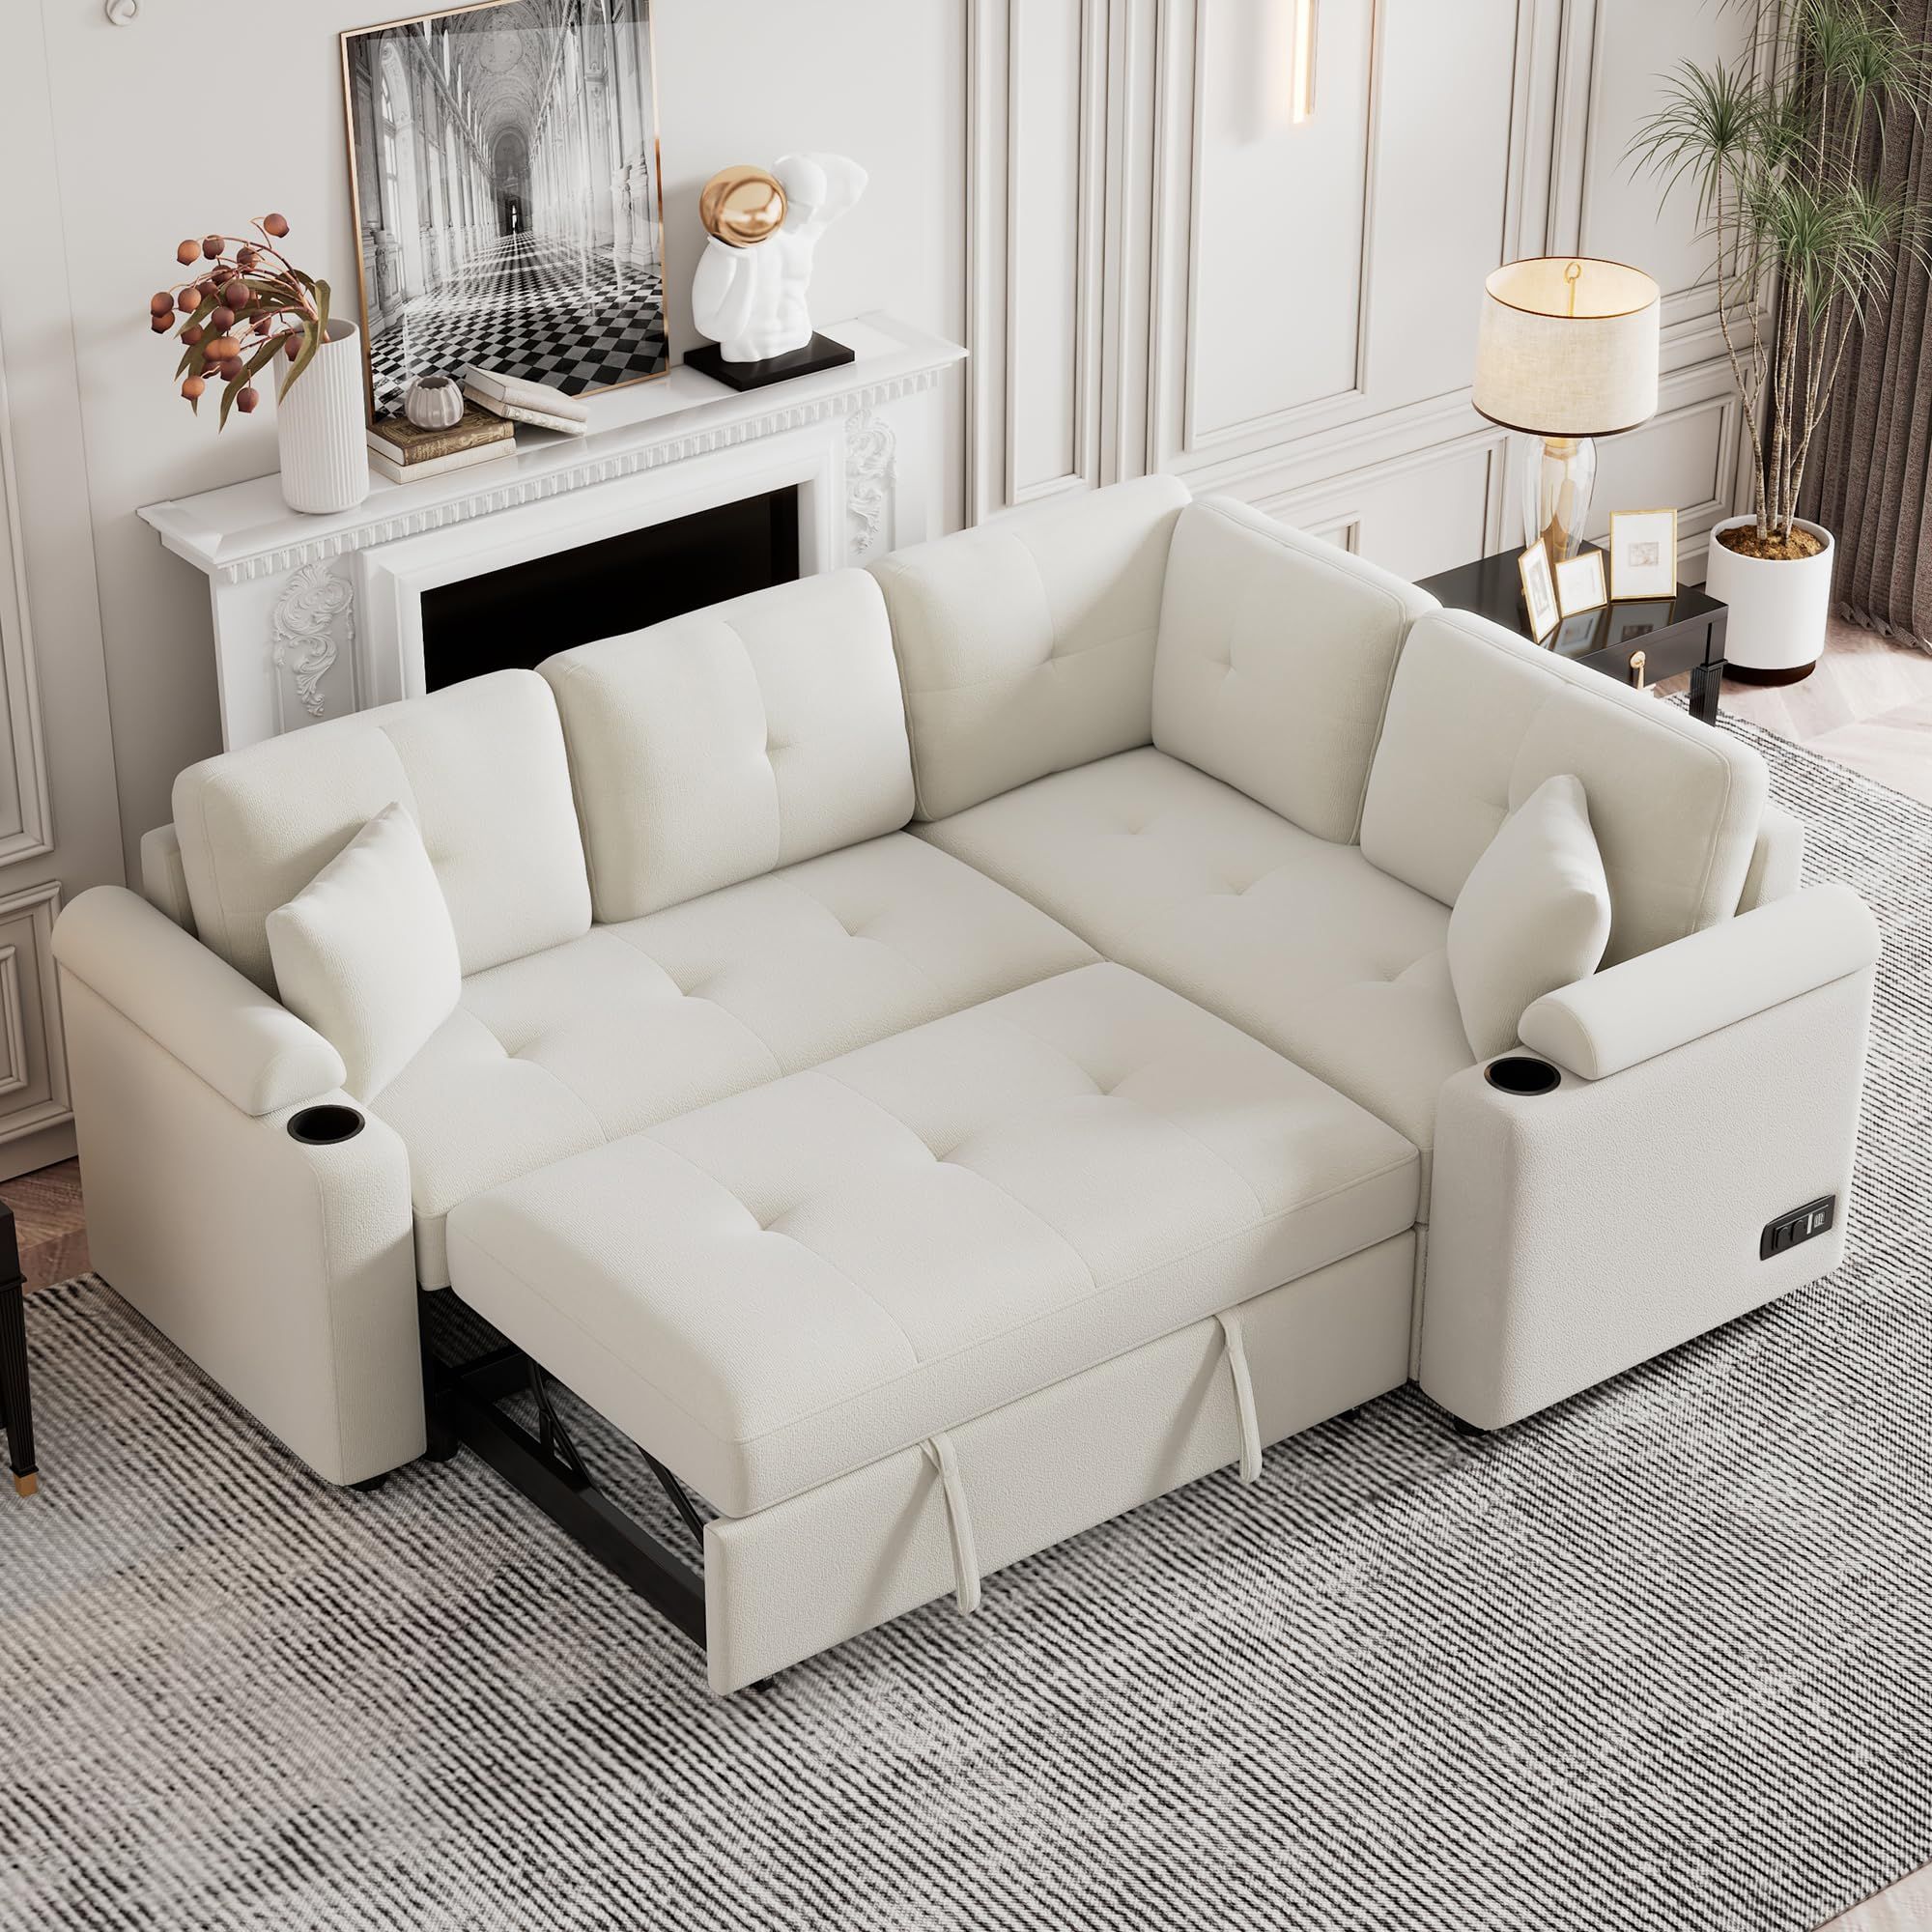 The Versatile Comfort of Modular Sectional Sleeper Sofas